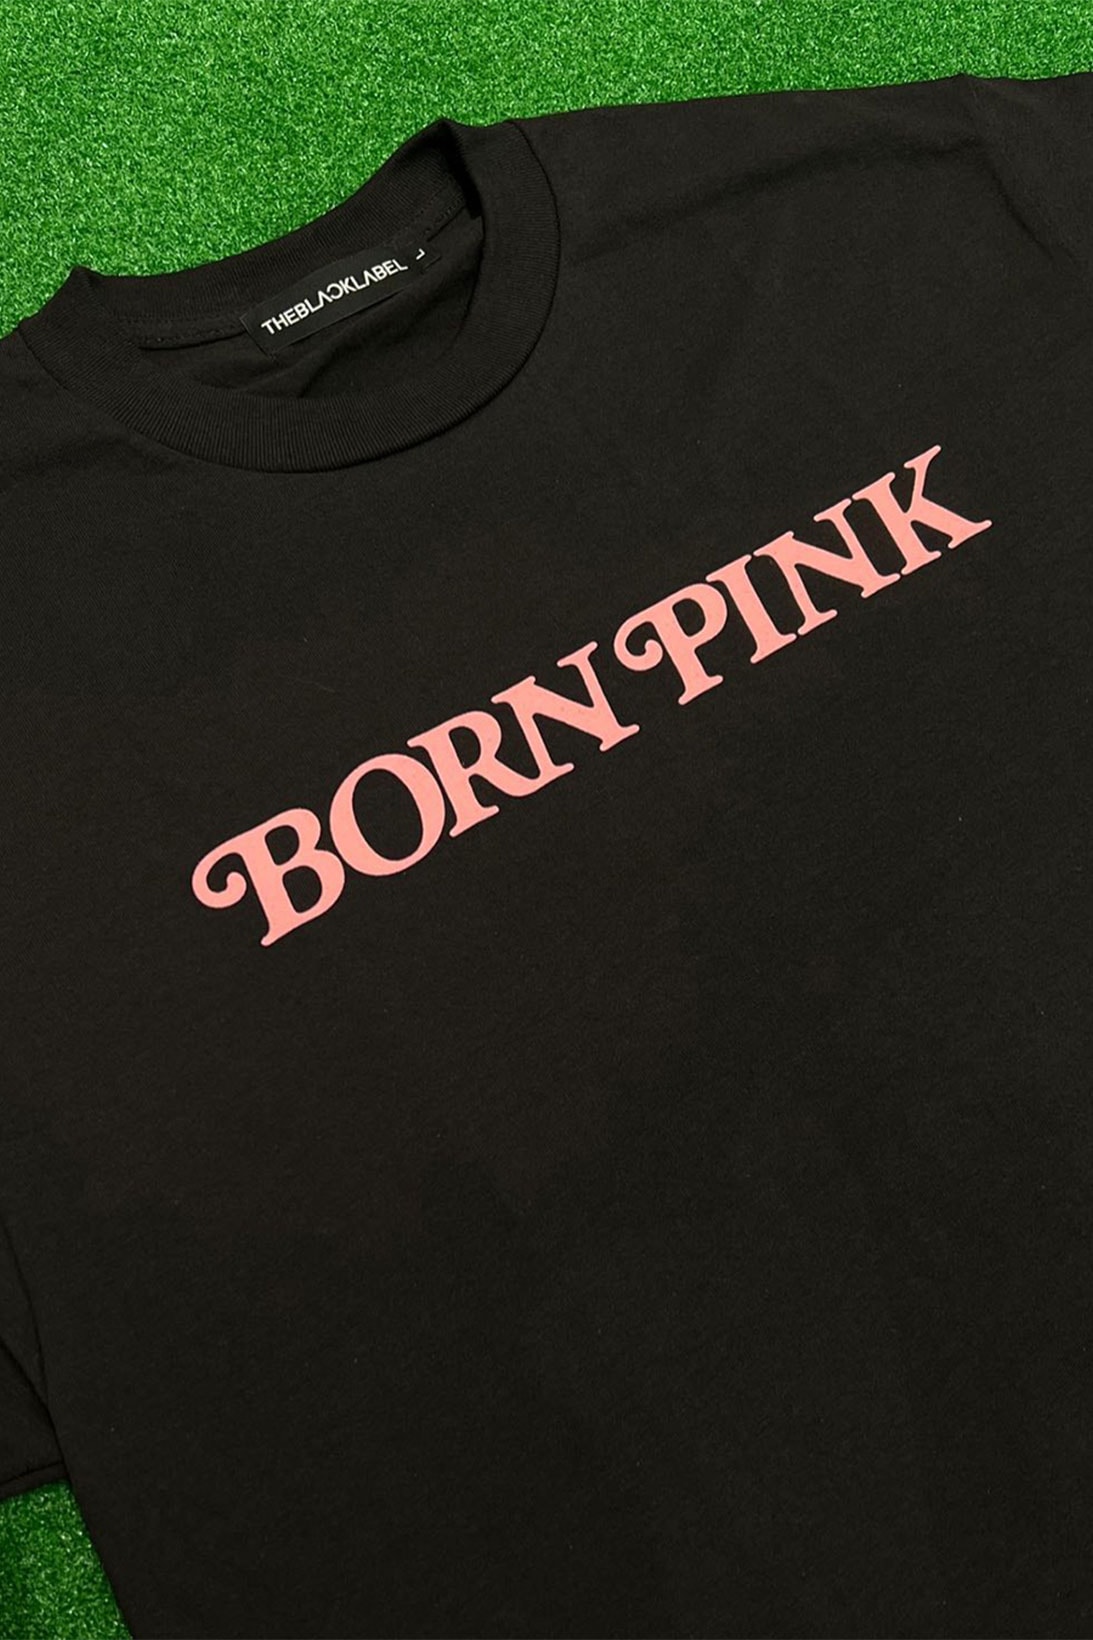 Verdy BLACKPINK 'BORN PINK' Merchandise Teaser Release Info